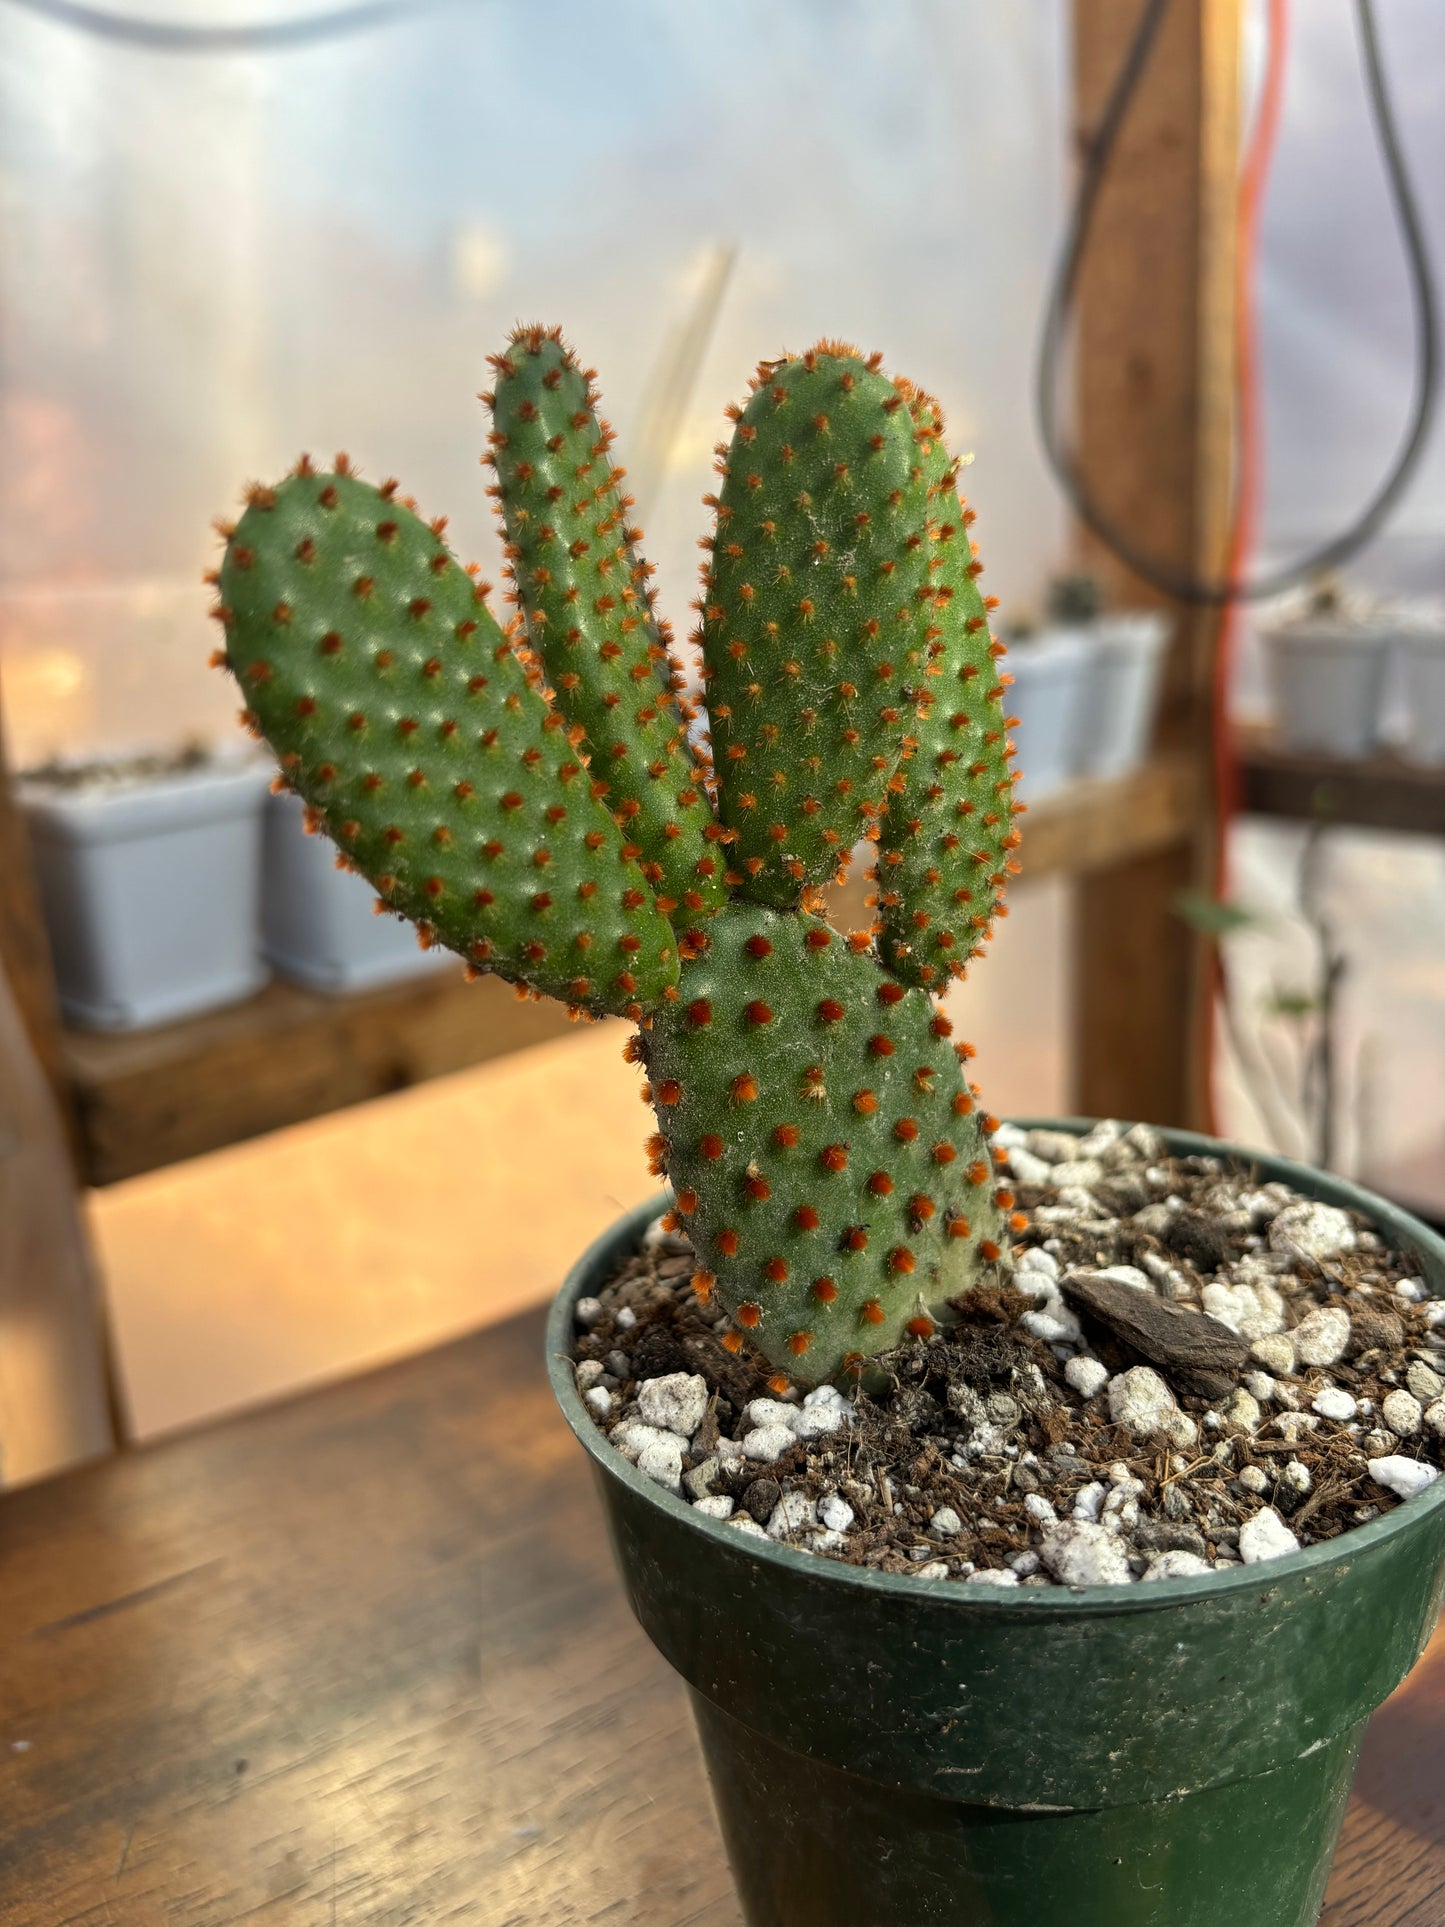 Cinnamon Bunny Ears Cactus, Opuntia Microdasys S. Rufida, Well Rooted